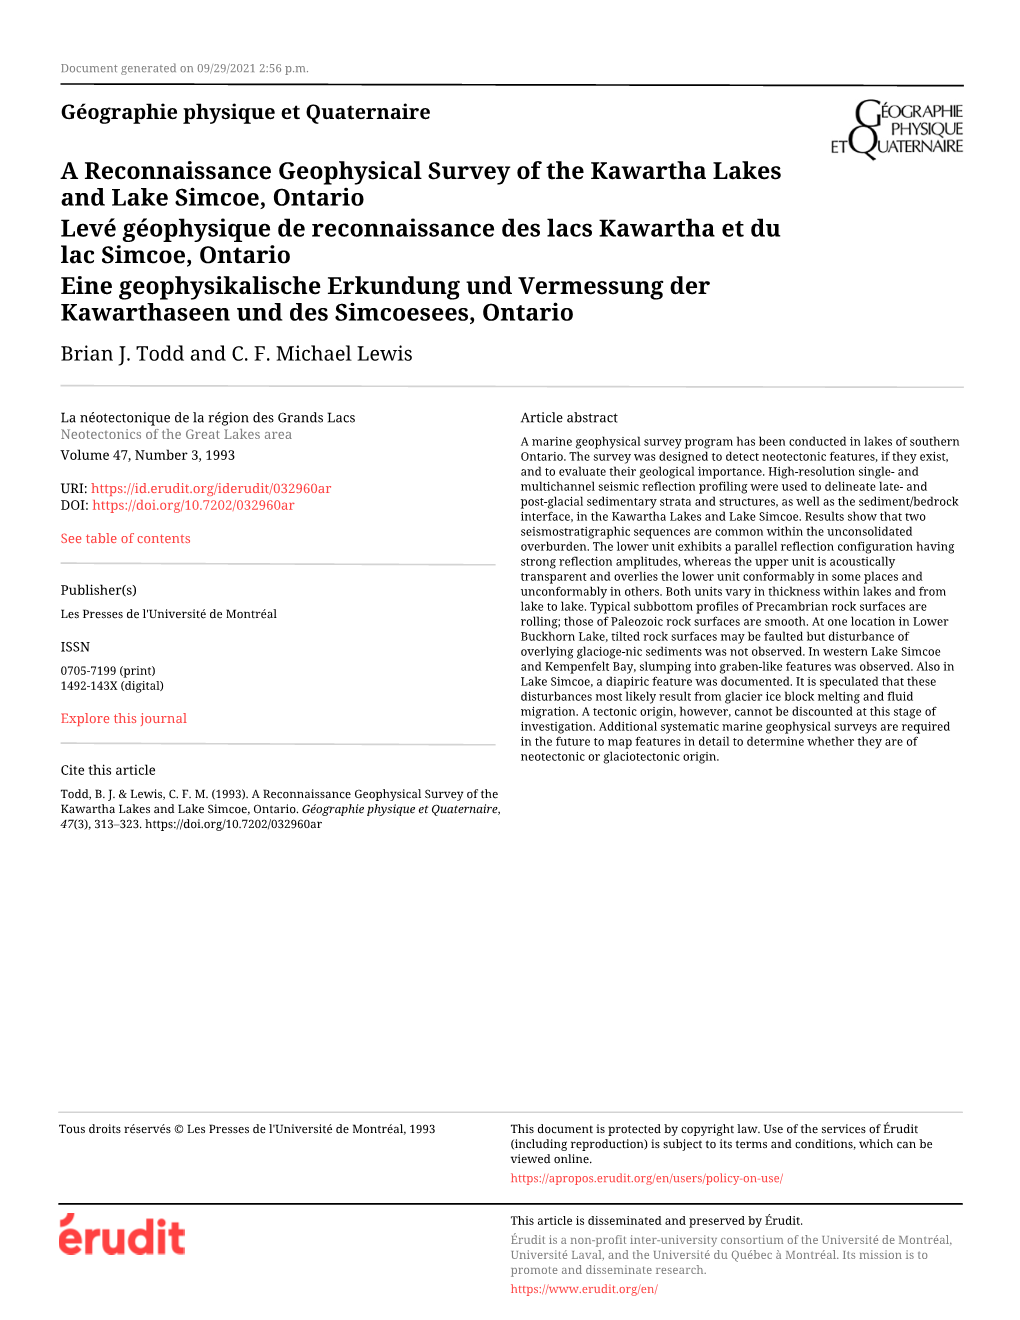 A Reconnaissance Geophysical Survey of the Kawartha Lakes and Lake Simcoe, Ontario